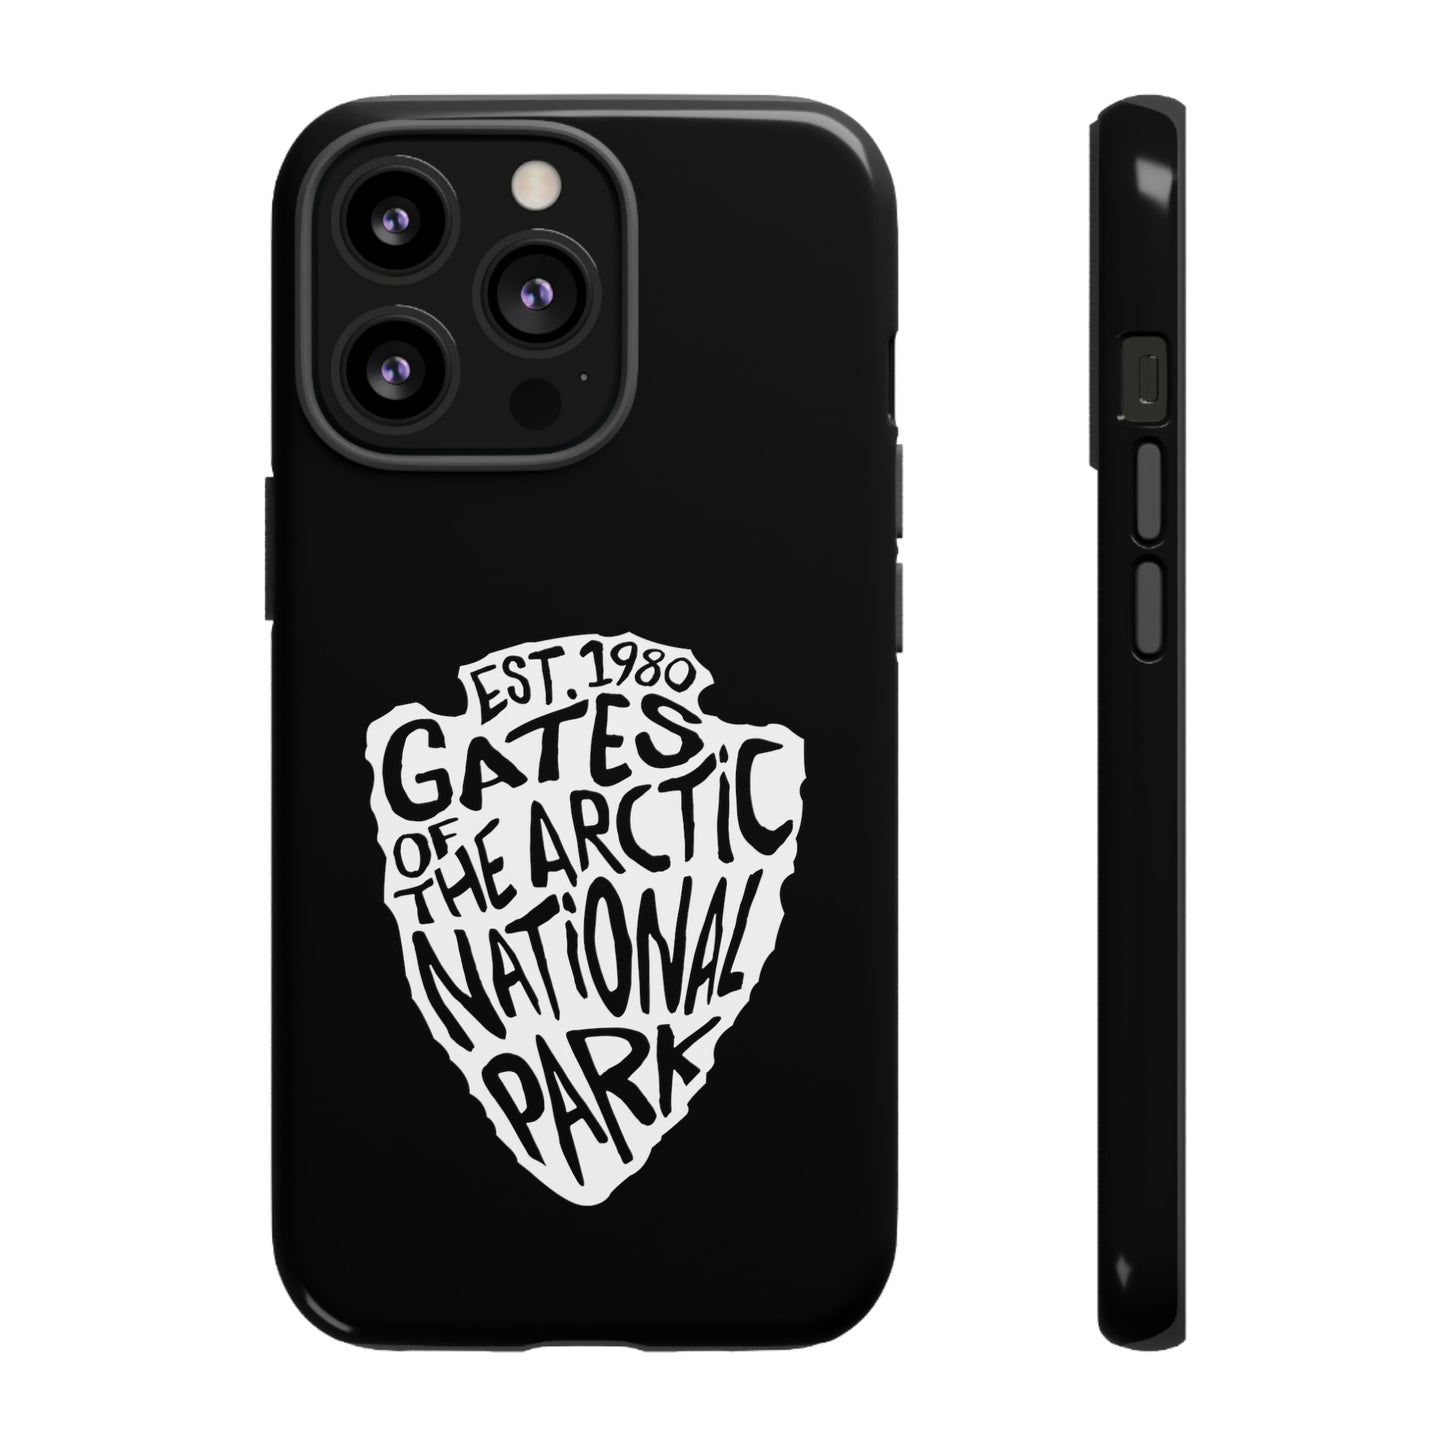 Gates of the Arctic National Park iPhone Case - Arrowhead Design